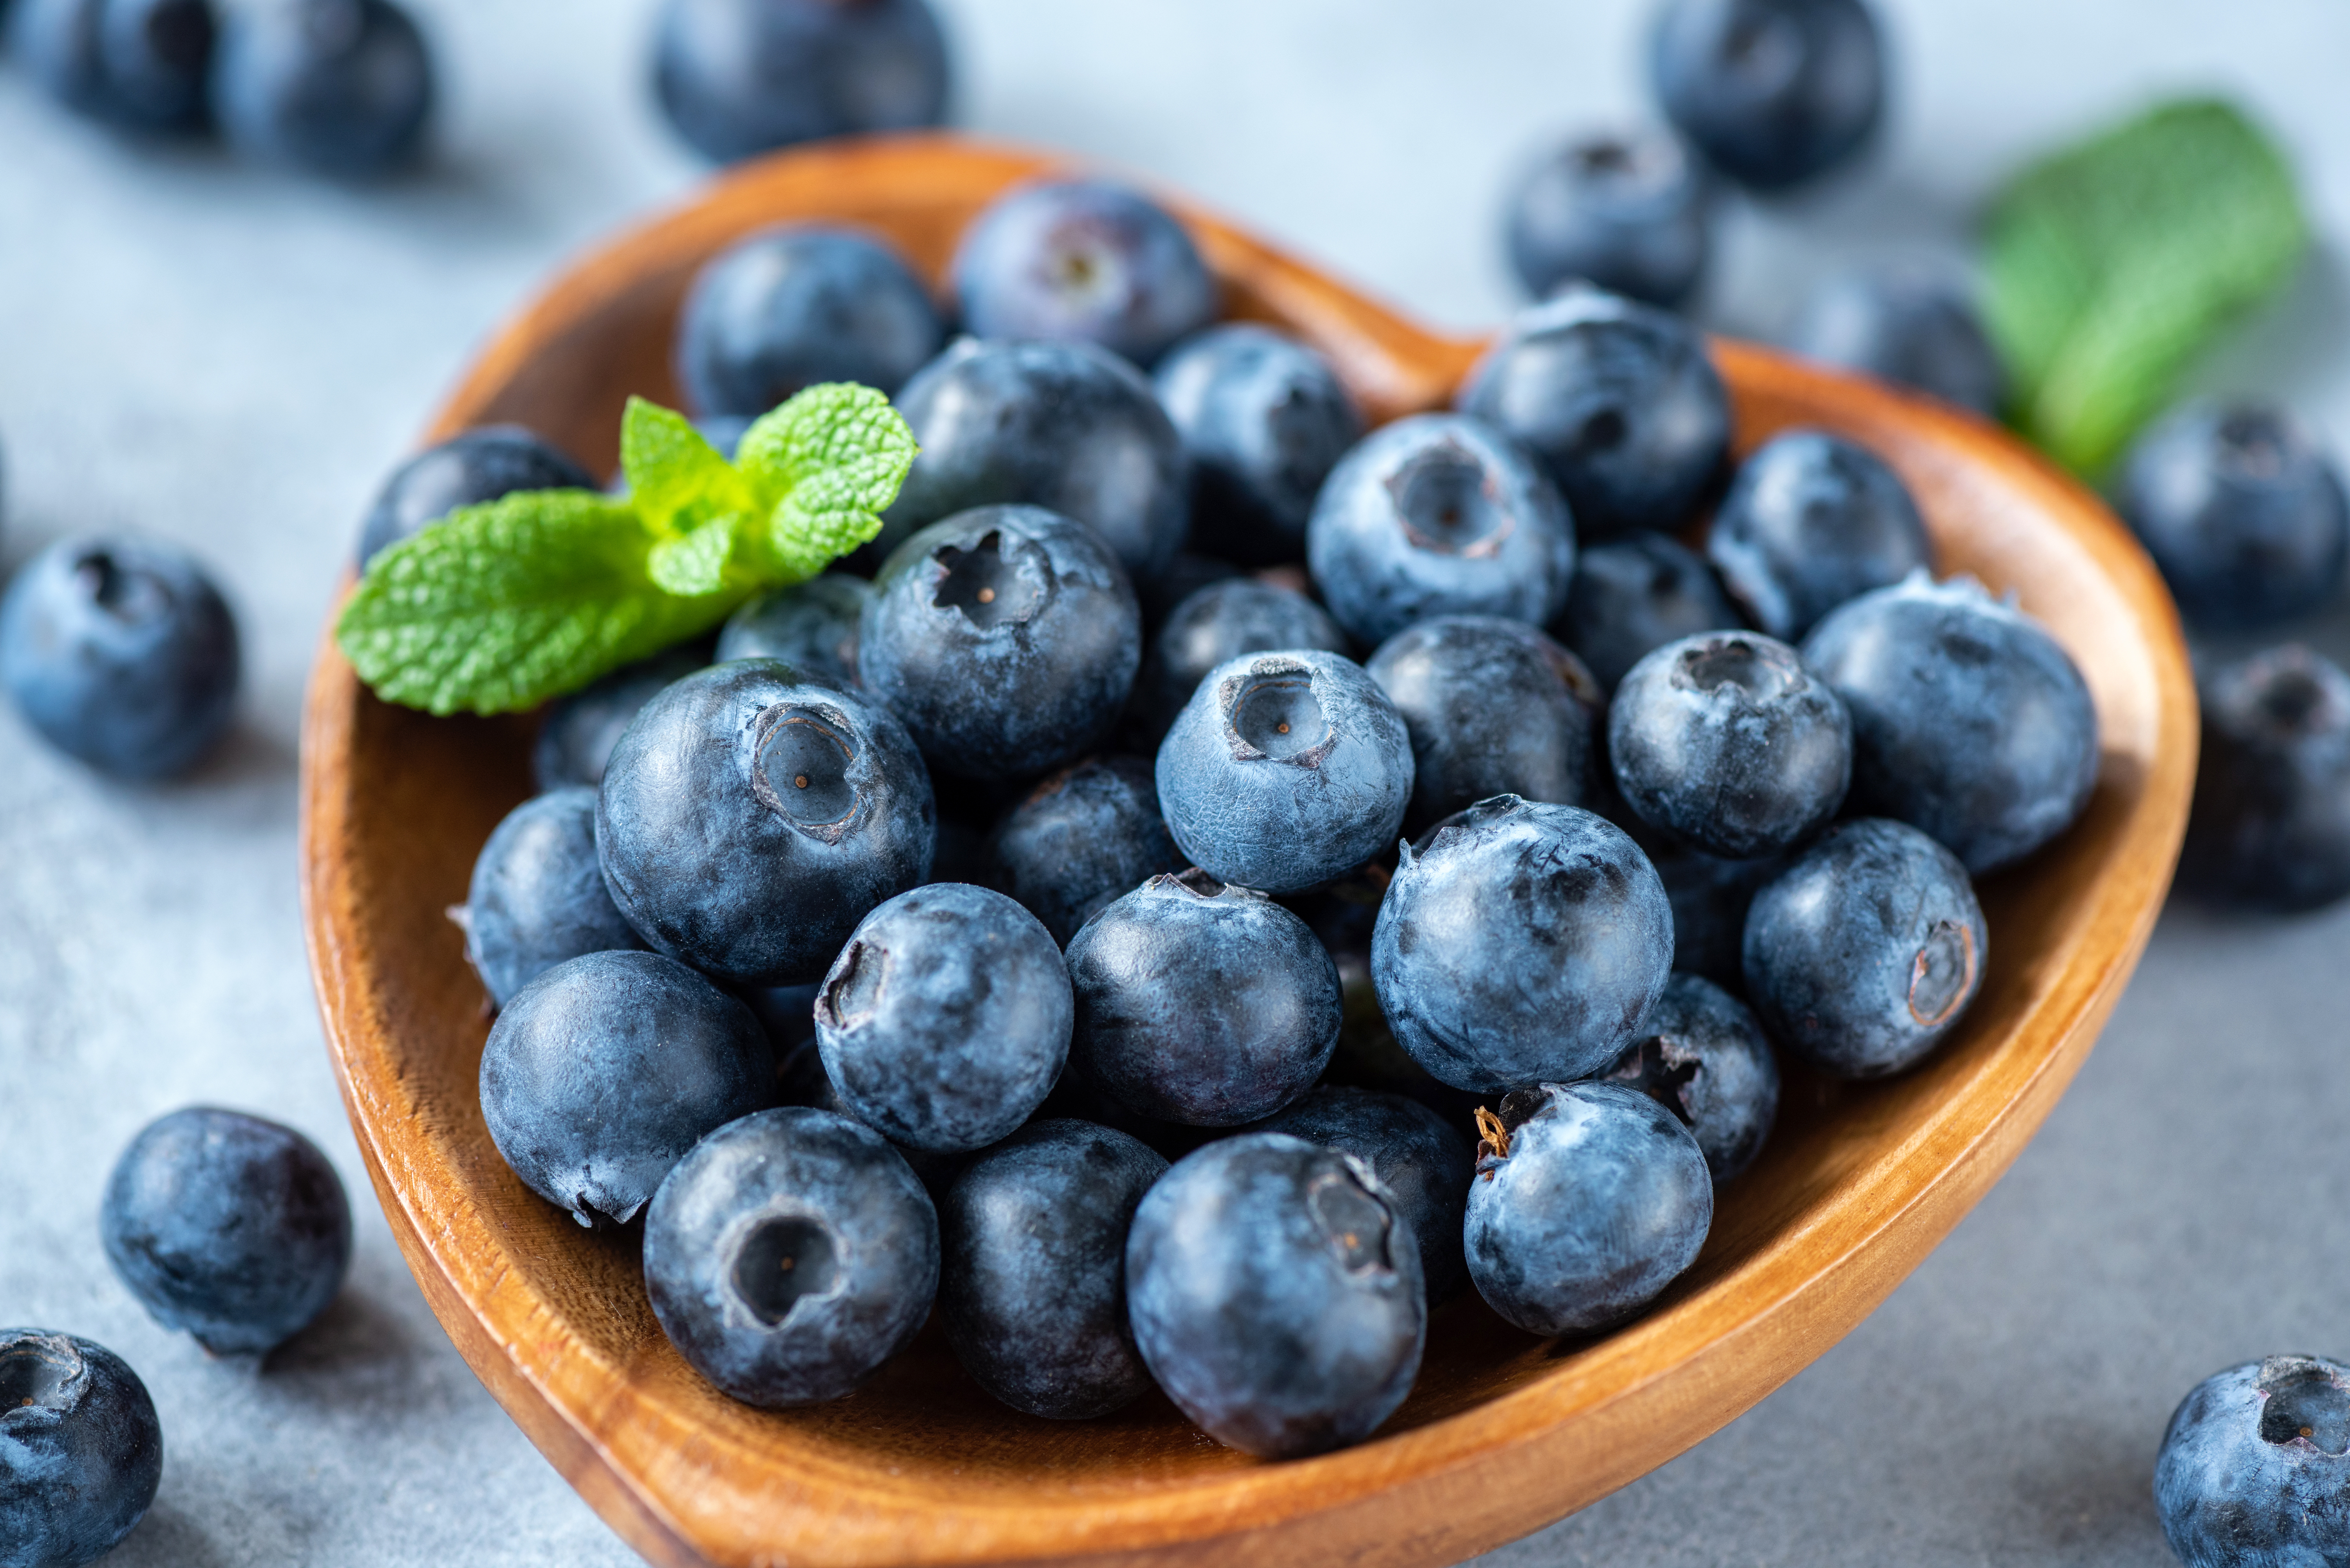 Fresh,Organic,Blueberries,In,A,Bowl,Closeup,View